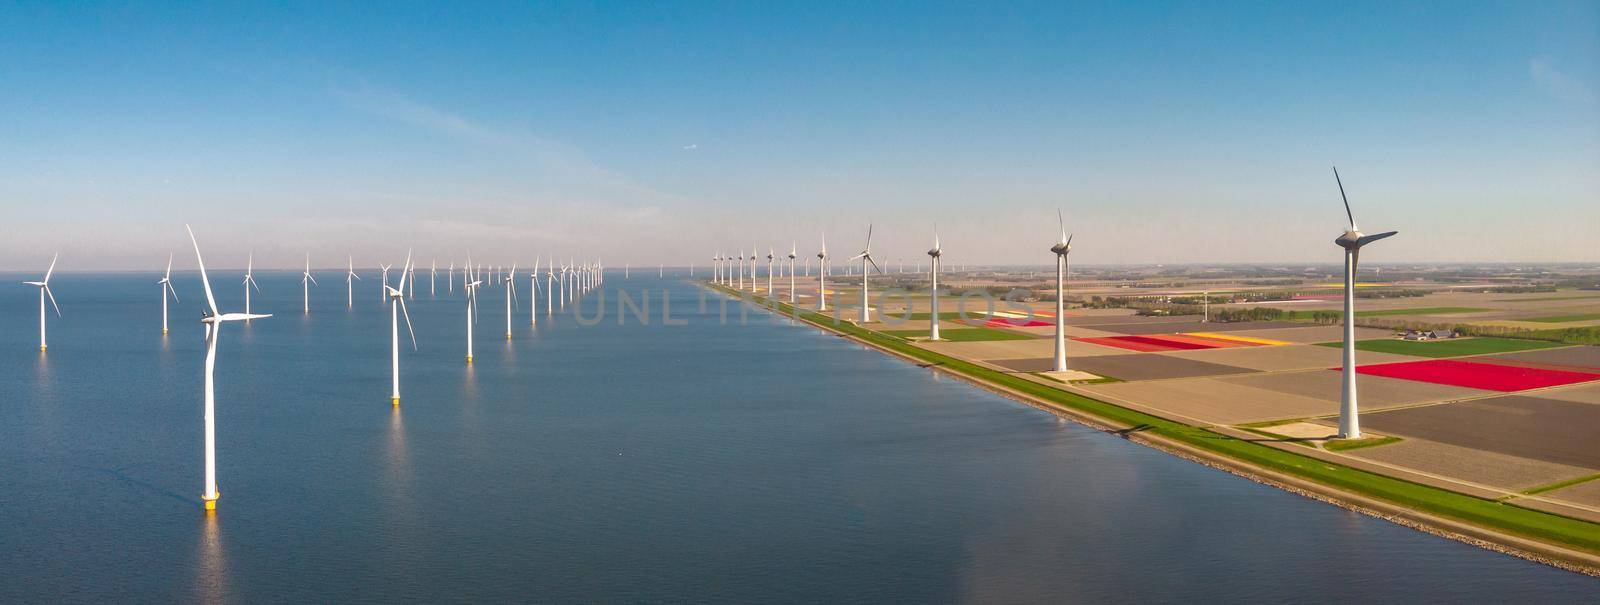 Windmill farm in the ocean Westermeerwind park, windmills isolated at sea on a beautiful bright day Netherlands Flevoland Noordoostpolder. Huge windmill turbines